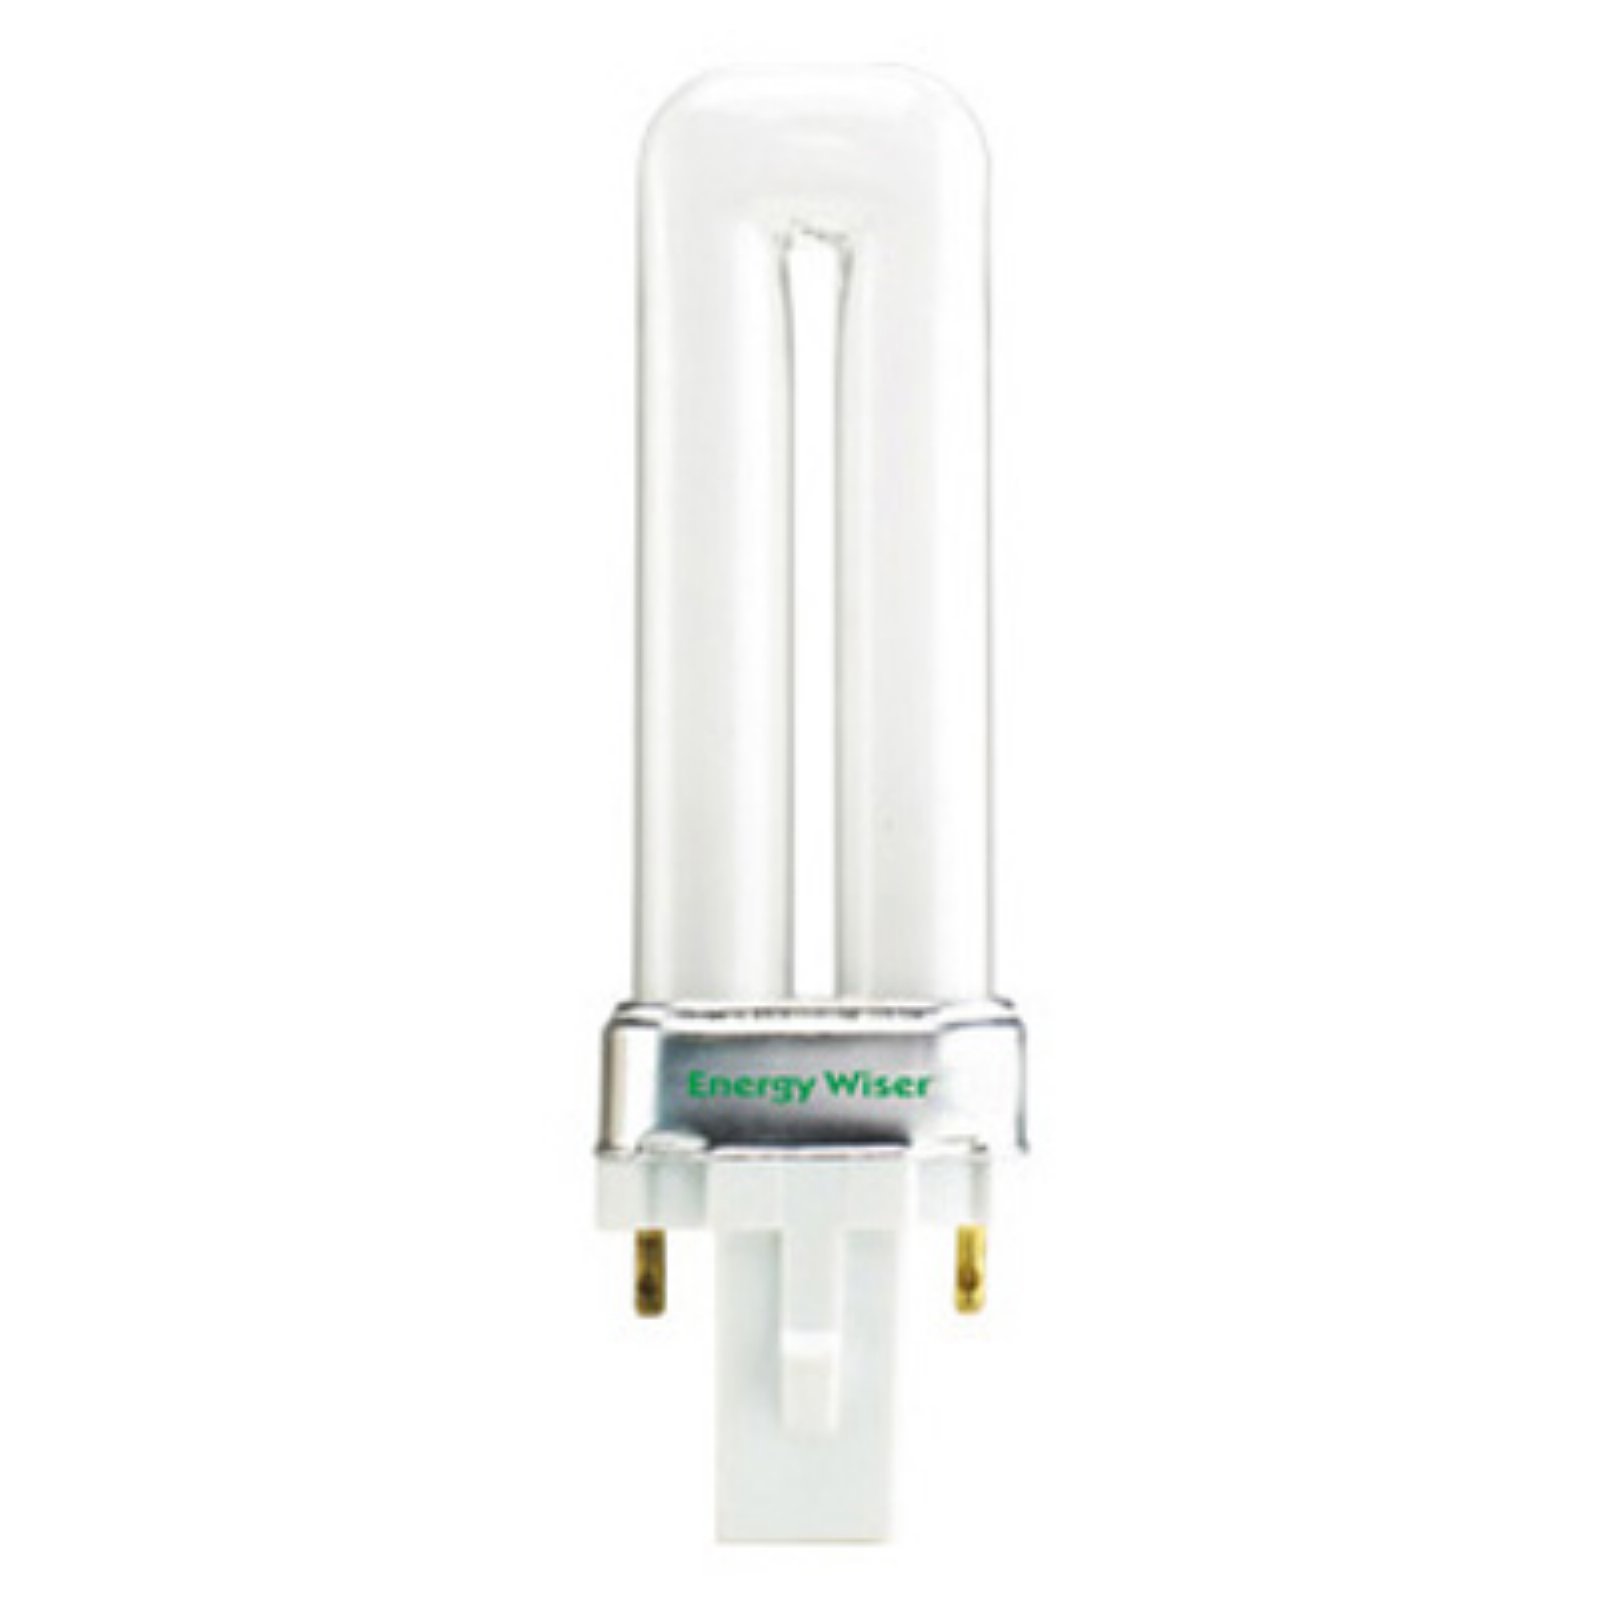 Bulbrite Warm White 2-Pin Twin Tube CFL Light Bulb - 20 pk. - image 1 of 3